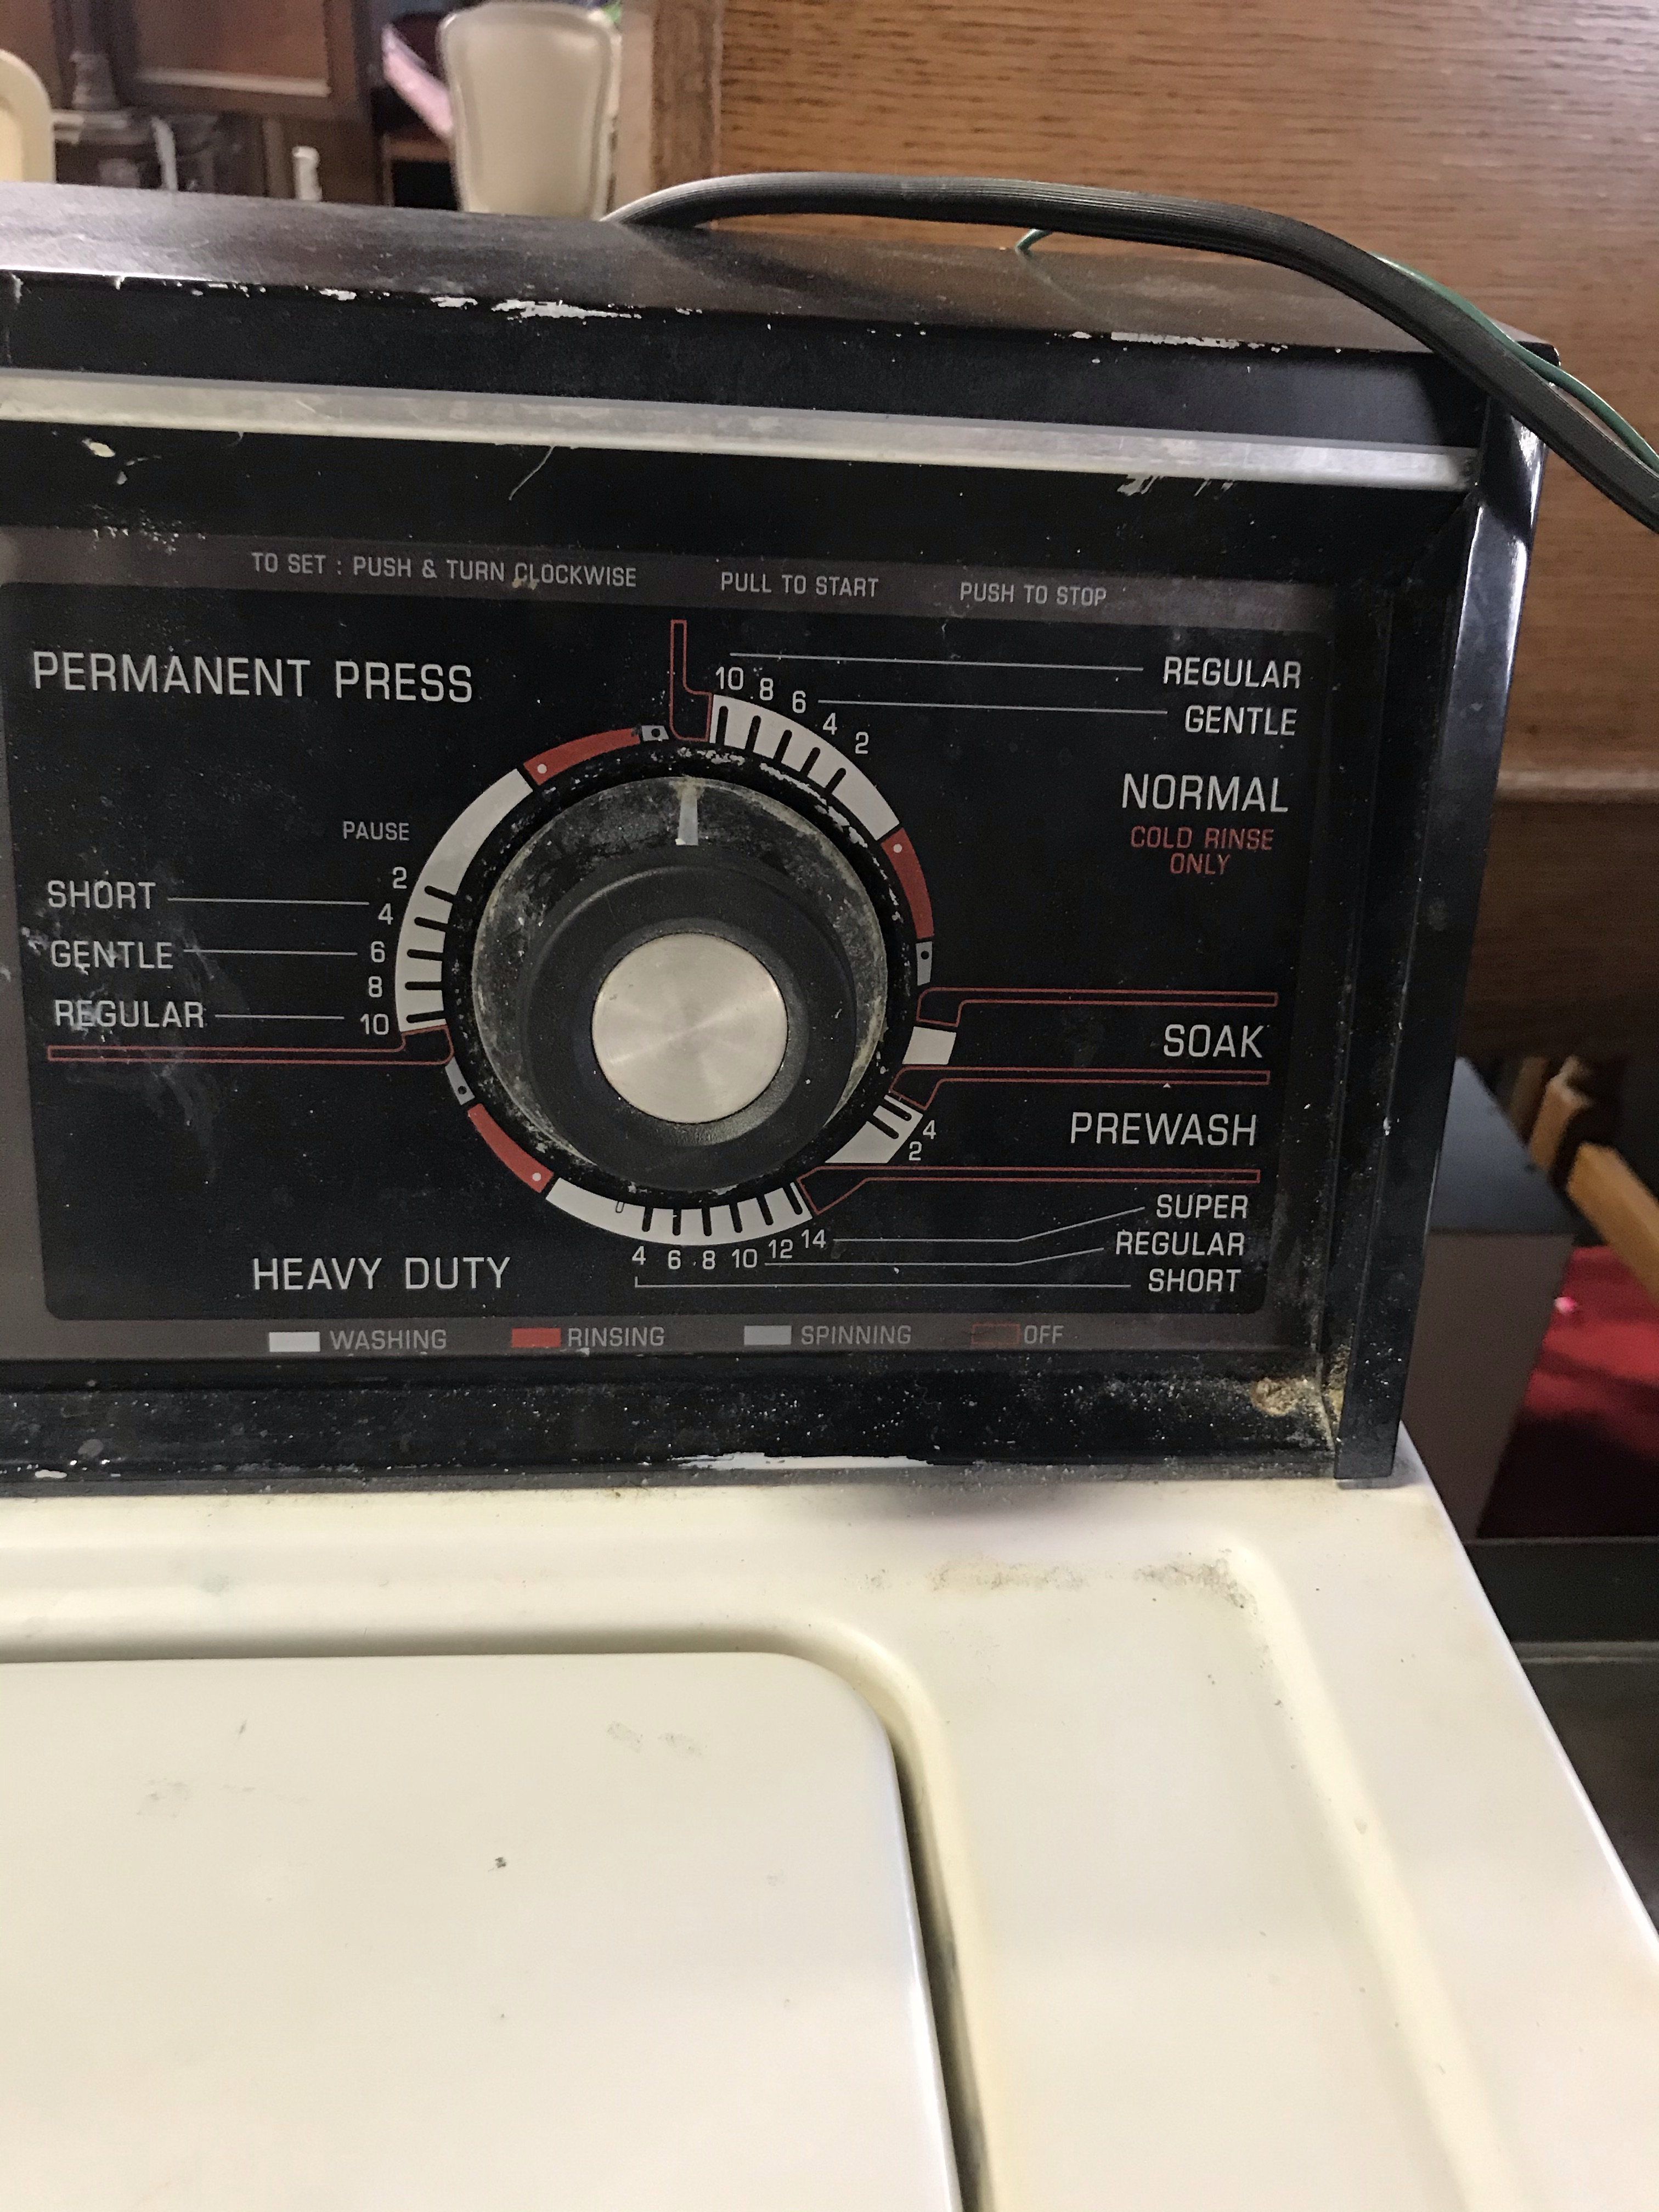 Kenmore 70 series Extra Capacity Washing Machine model #110.92574100